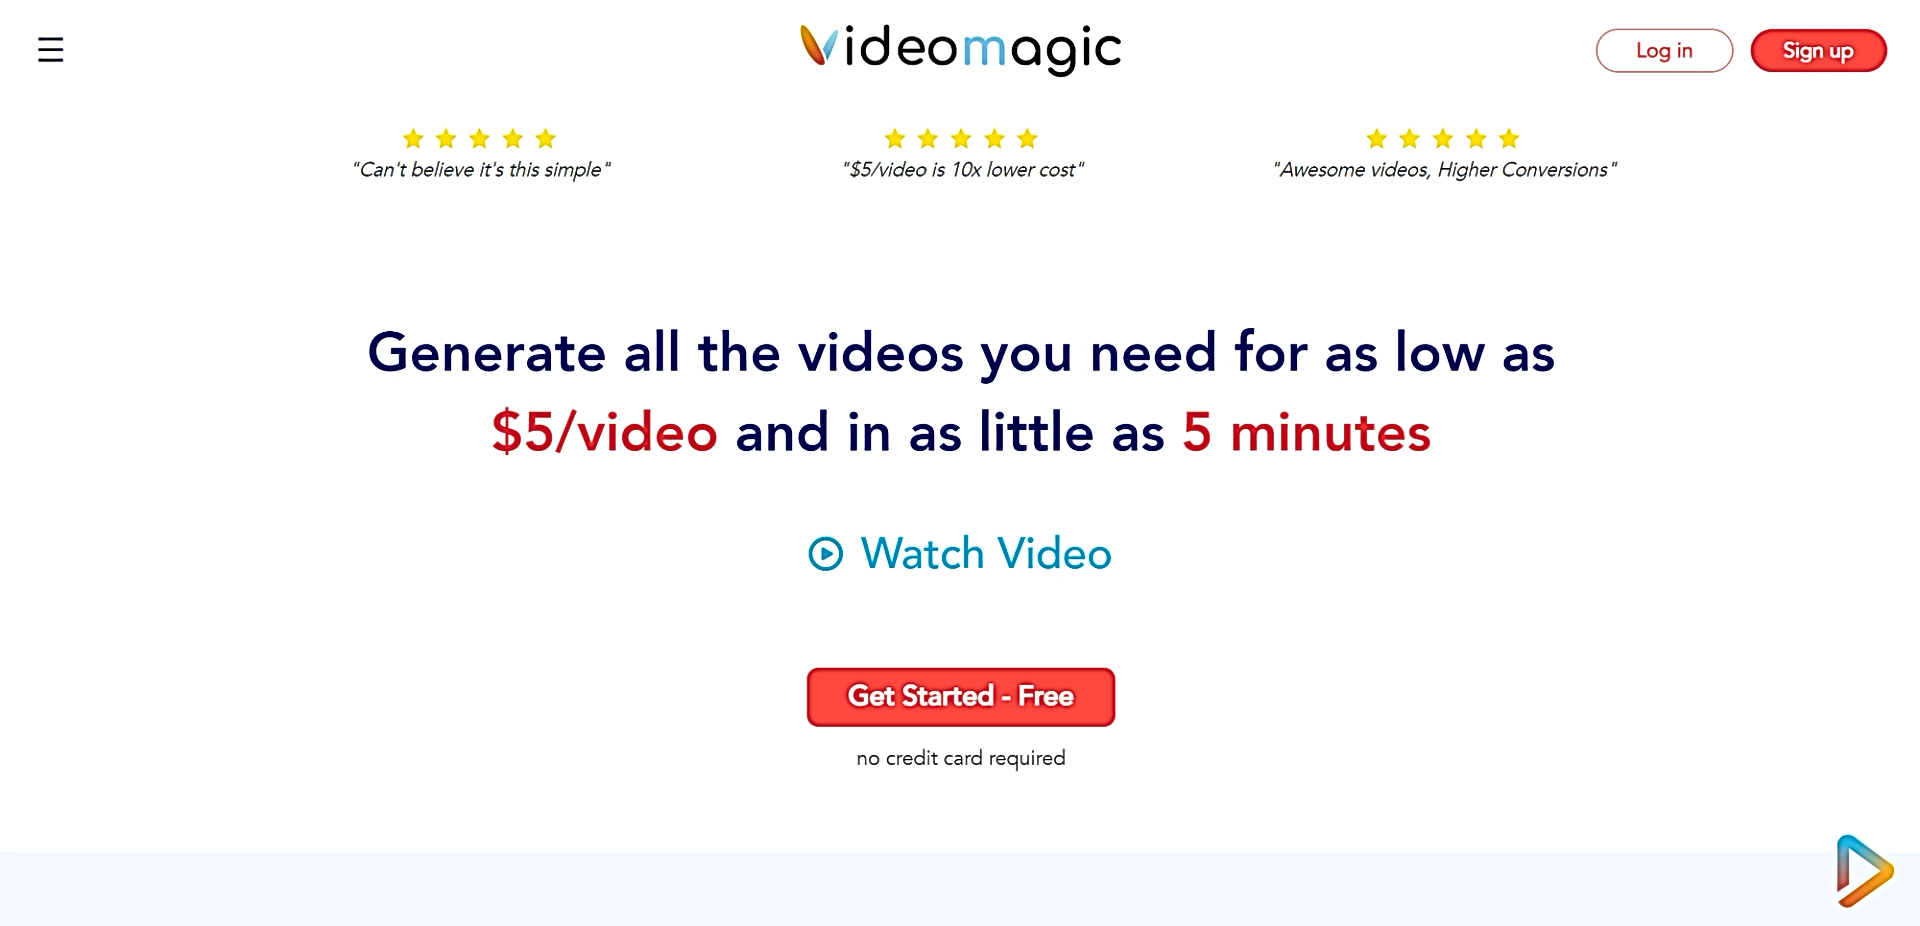 Video Magic featured